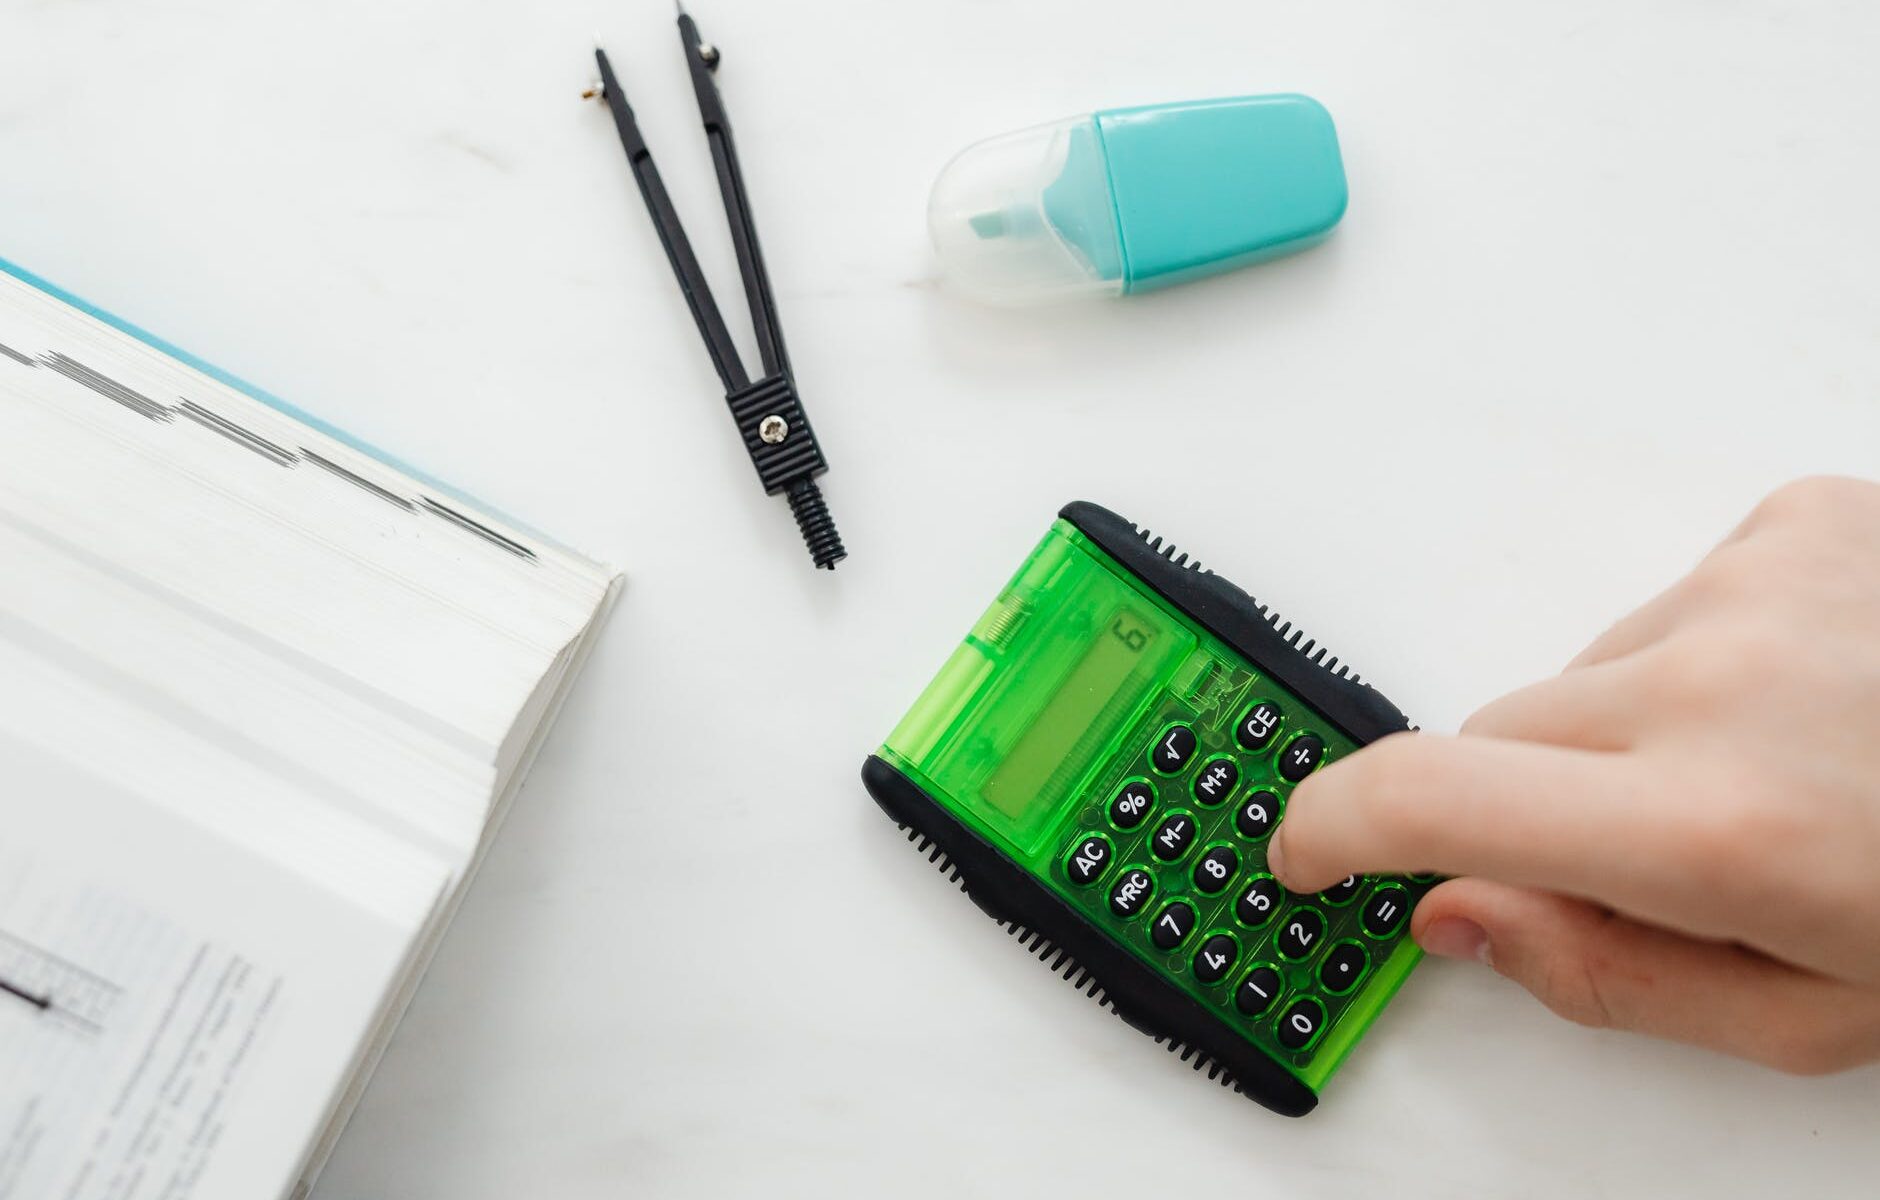 person using a small green and black calculator